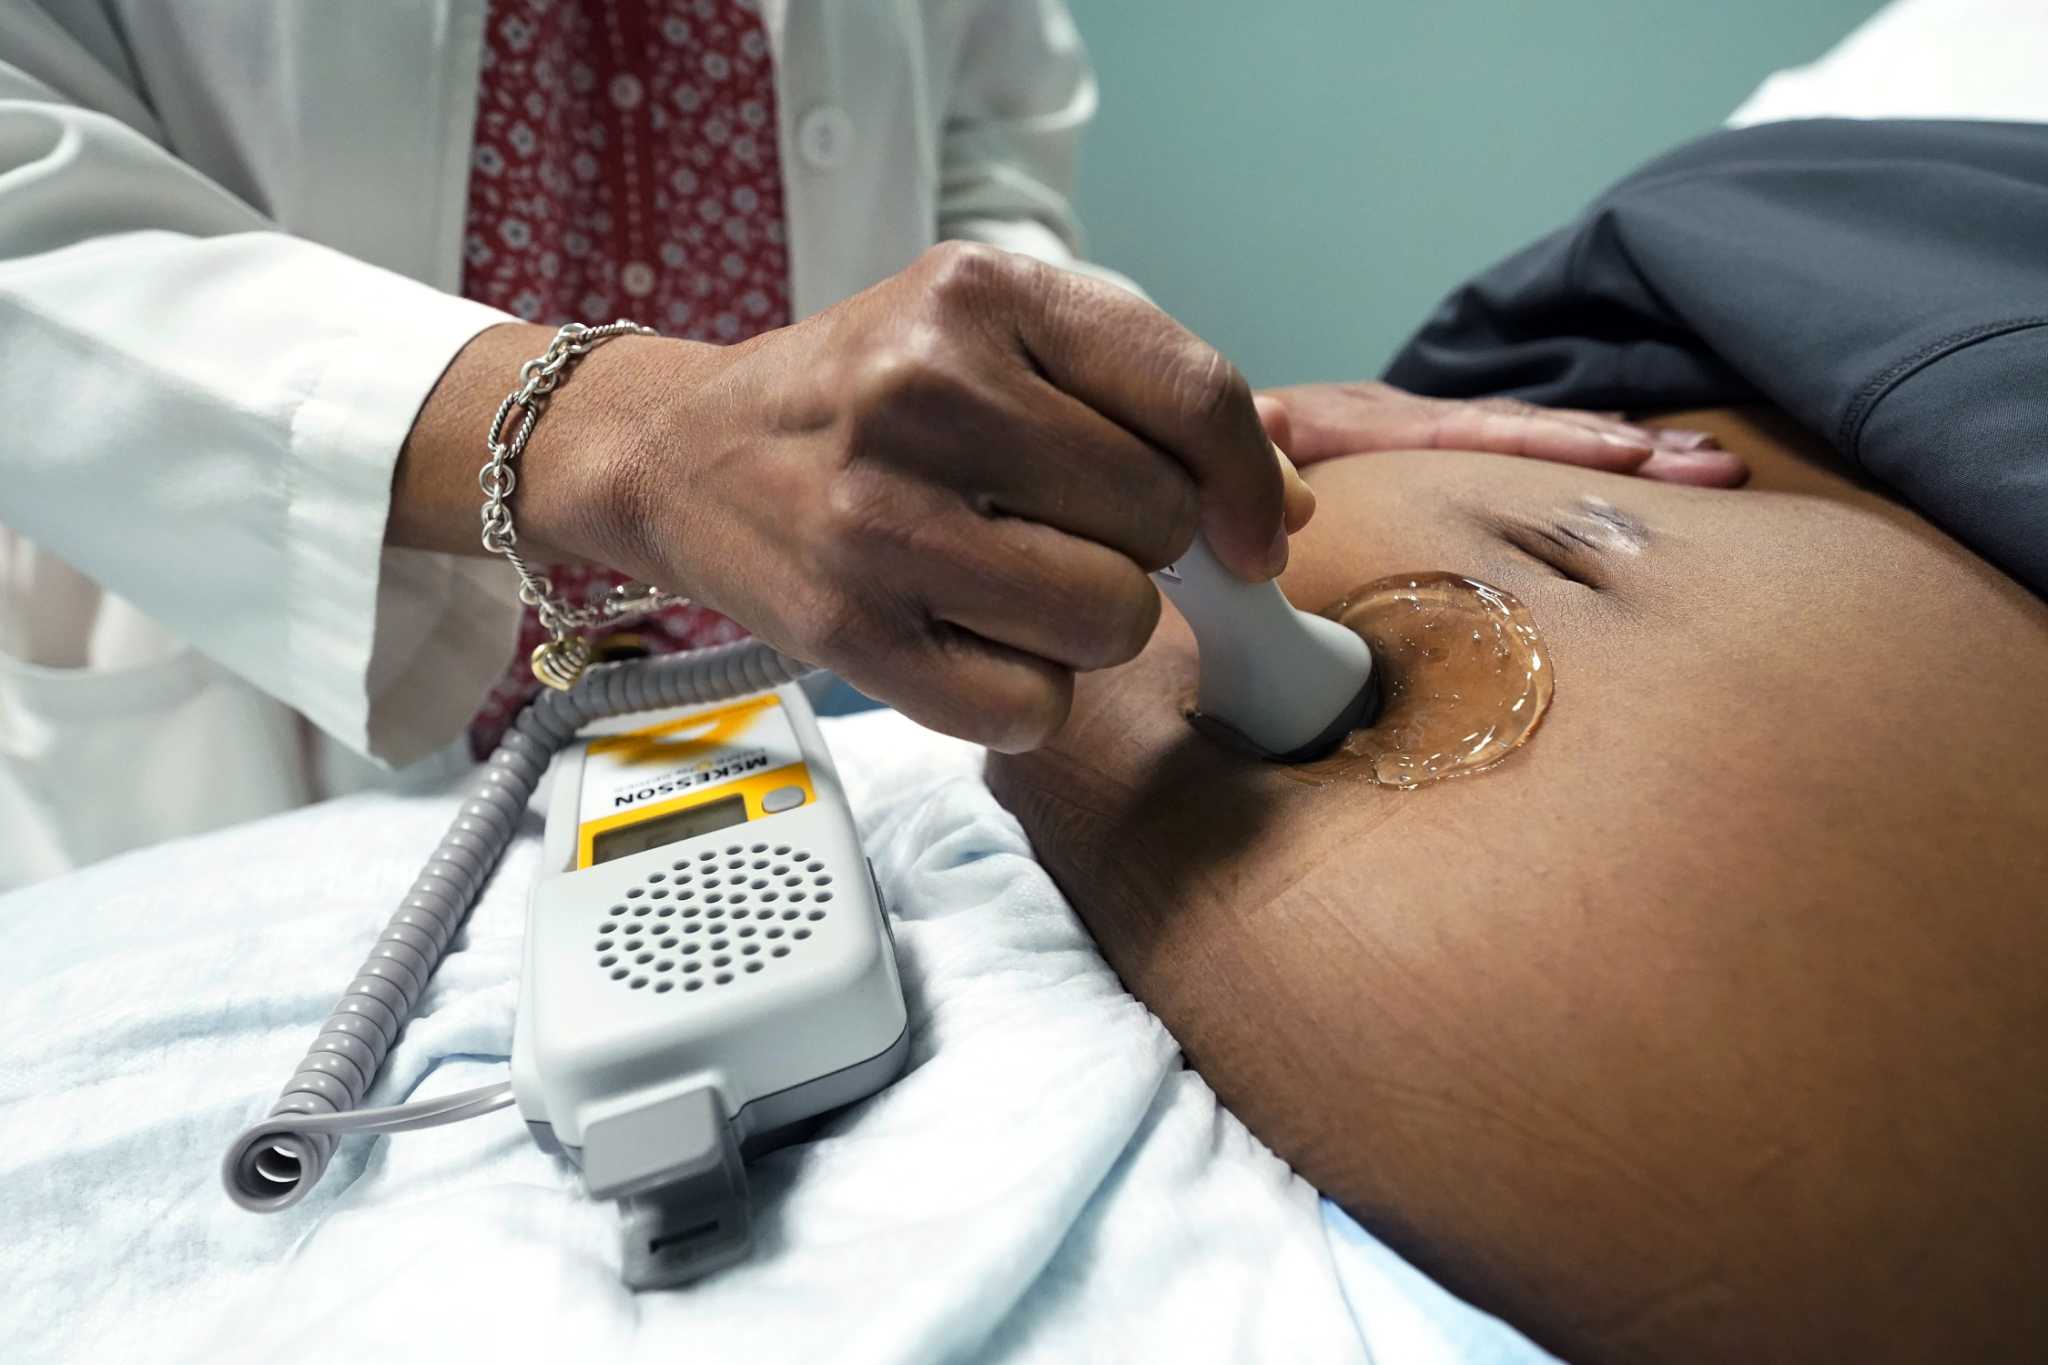 Louisiana bill seeks ‘fairness’ in pregnancy costs